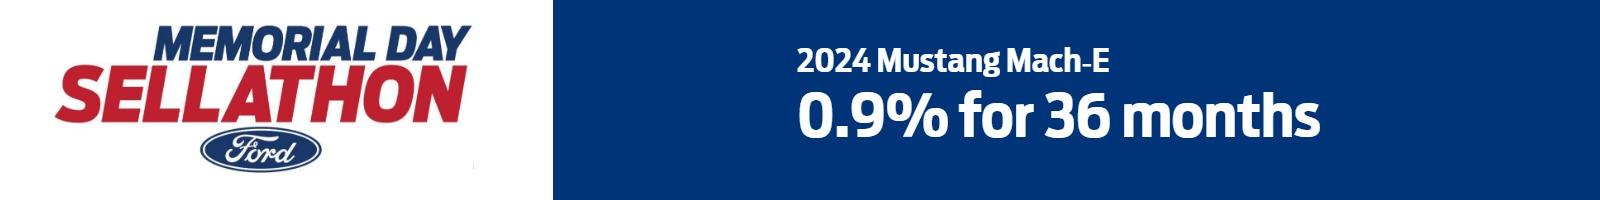 2024 Mustang Mach-E 0.9% for 36 months | Banner